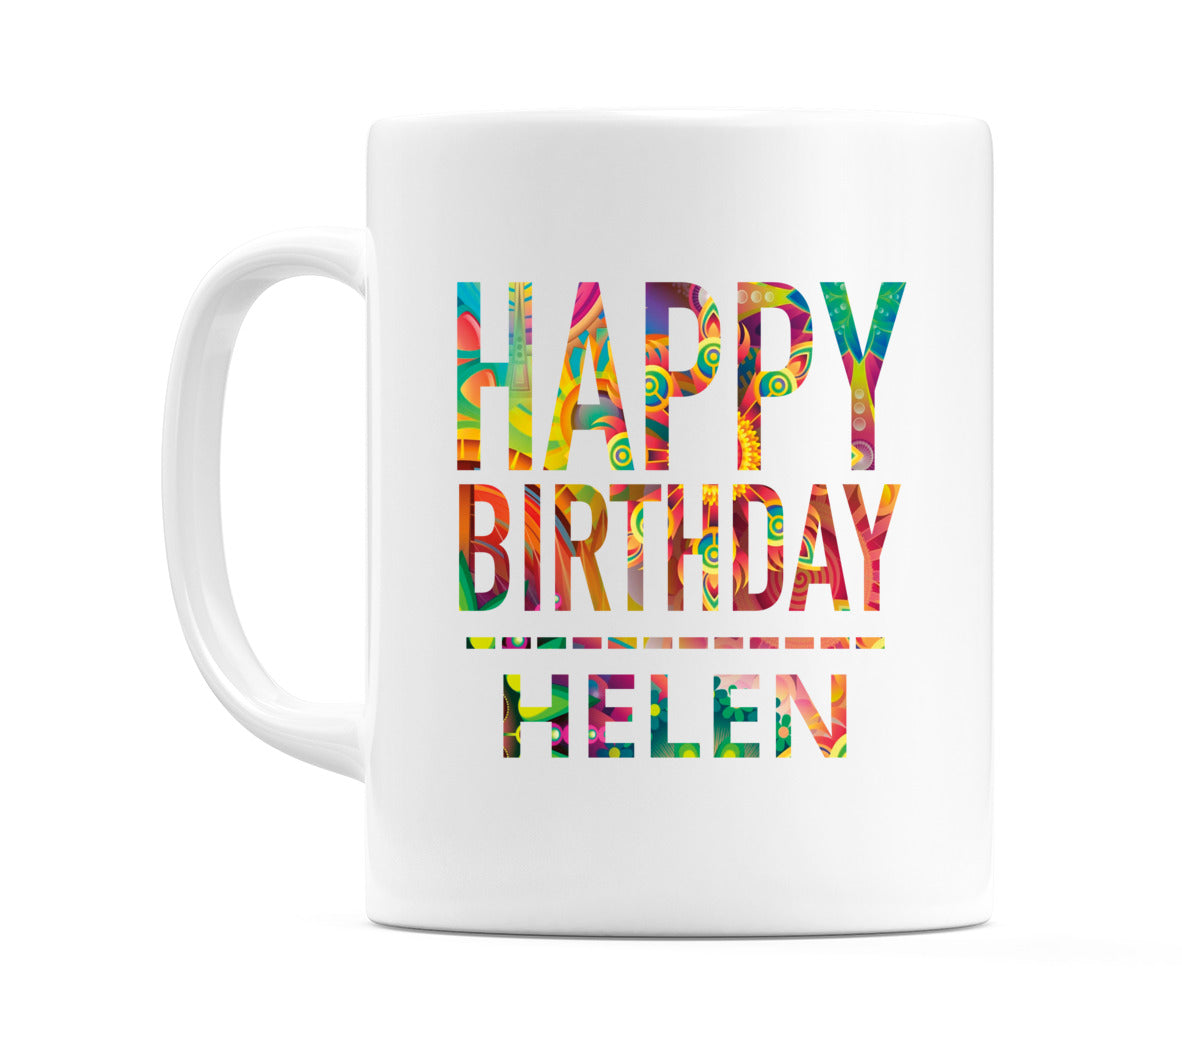 Happy Birthday Helen (Tie Dye Effect) Mug Cup by WeDoMugs